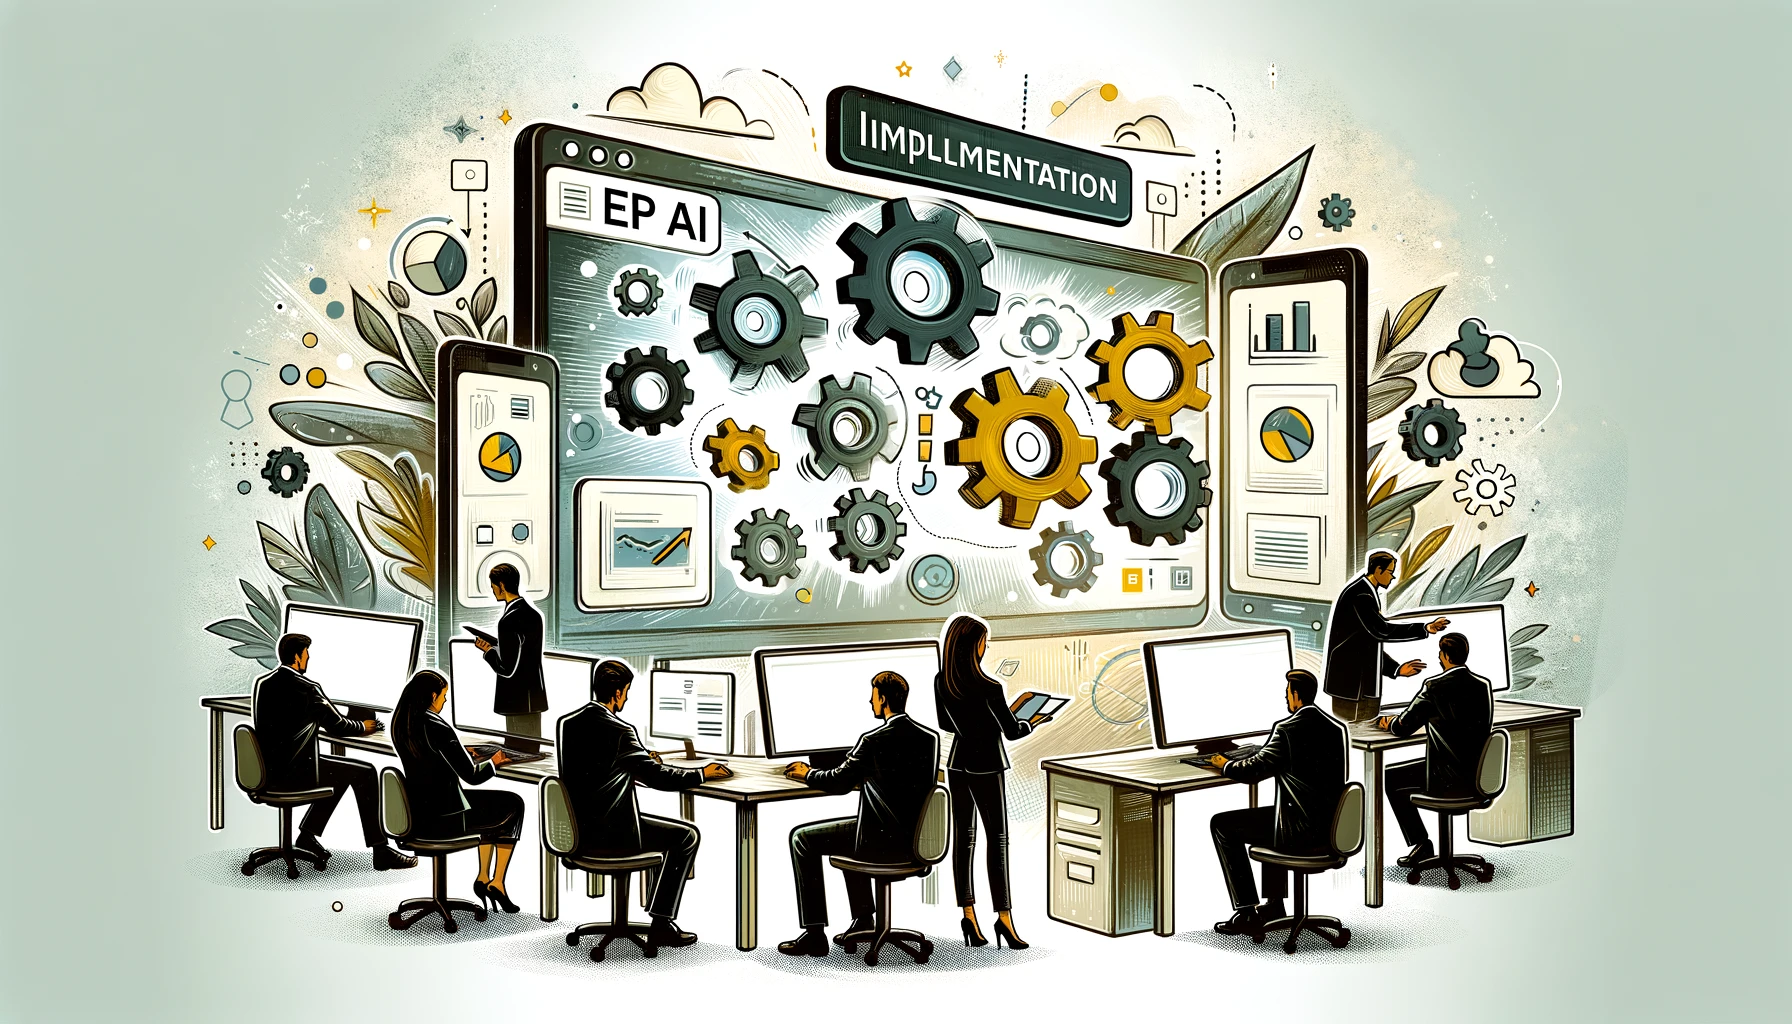 ERP AI Implementation